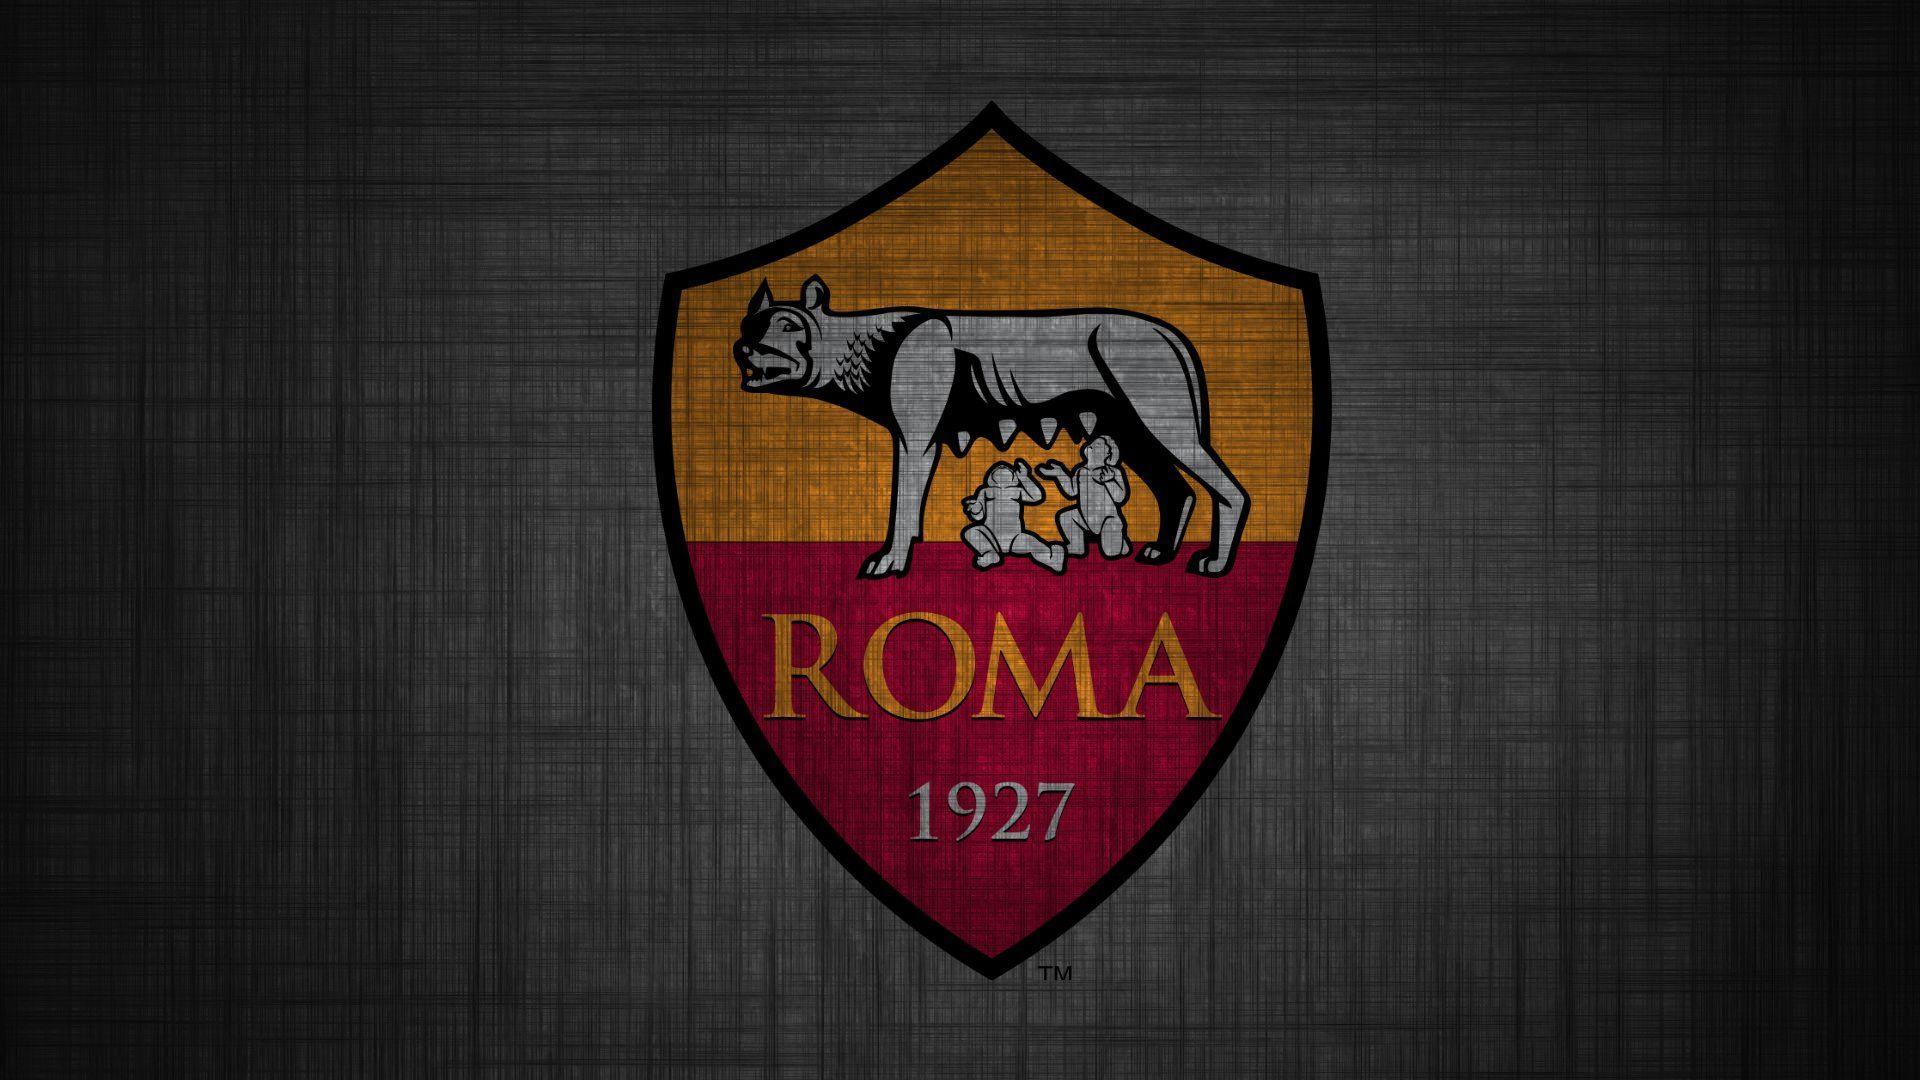 Awesome As Roma Wallpaper. As Roma Wallpaper